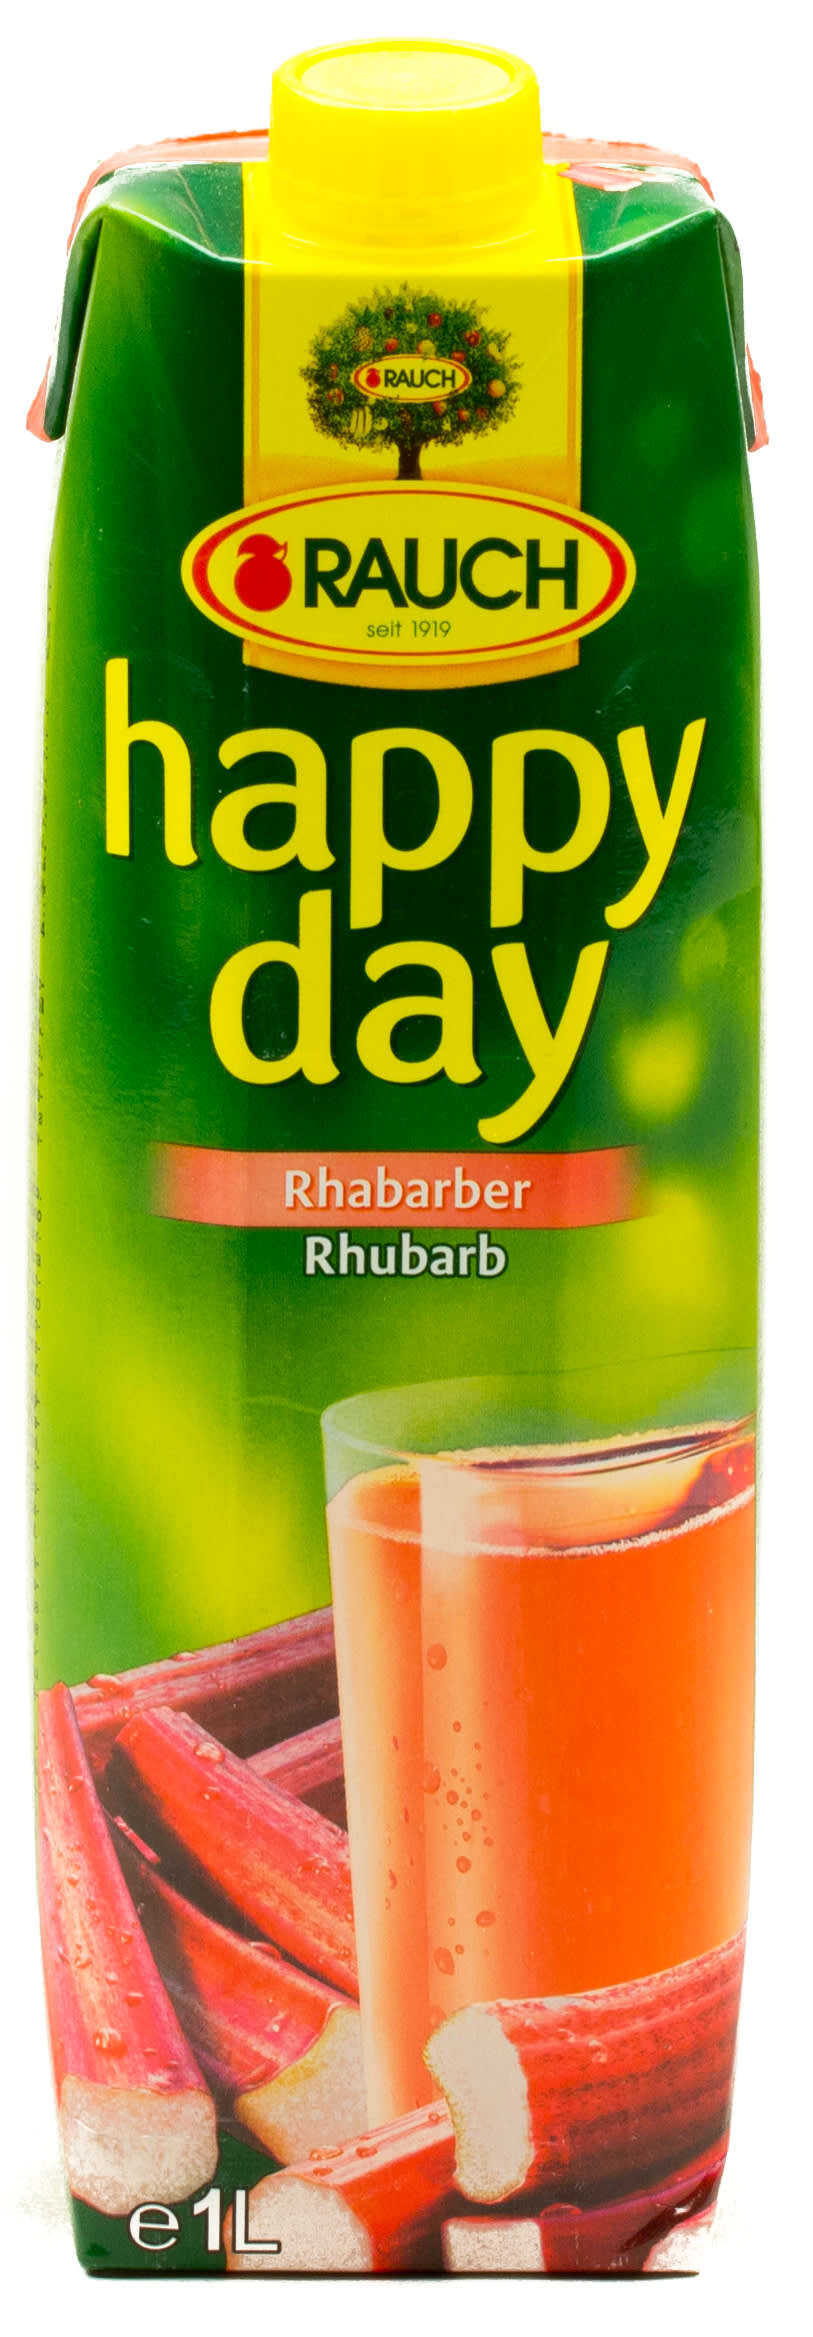 Happy Day Rhabarber Karton 6 x 1 l Tetra-Pack